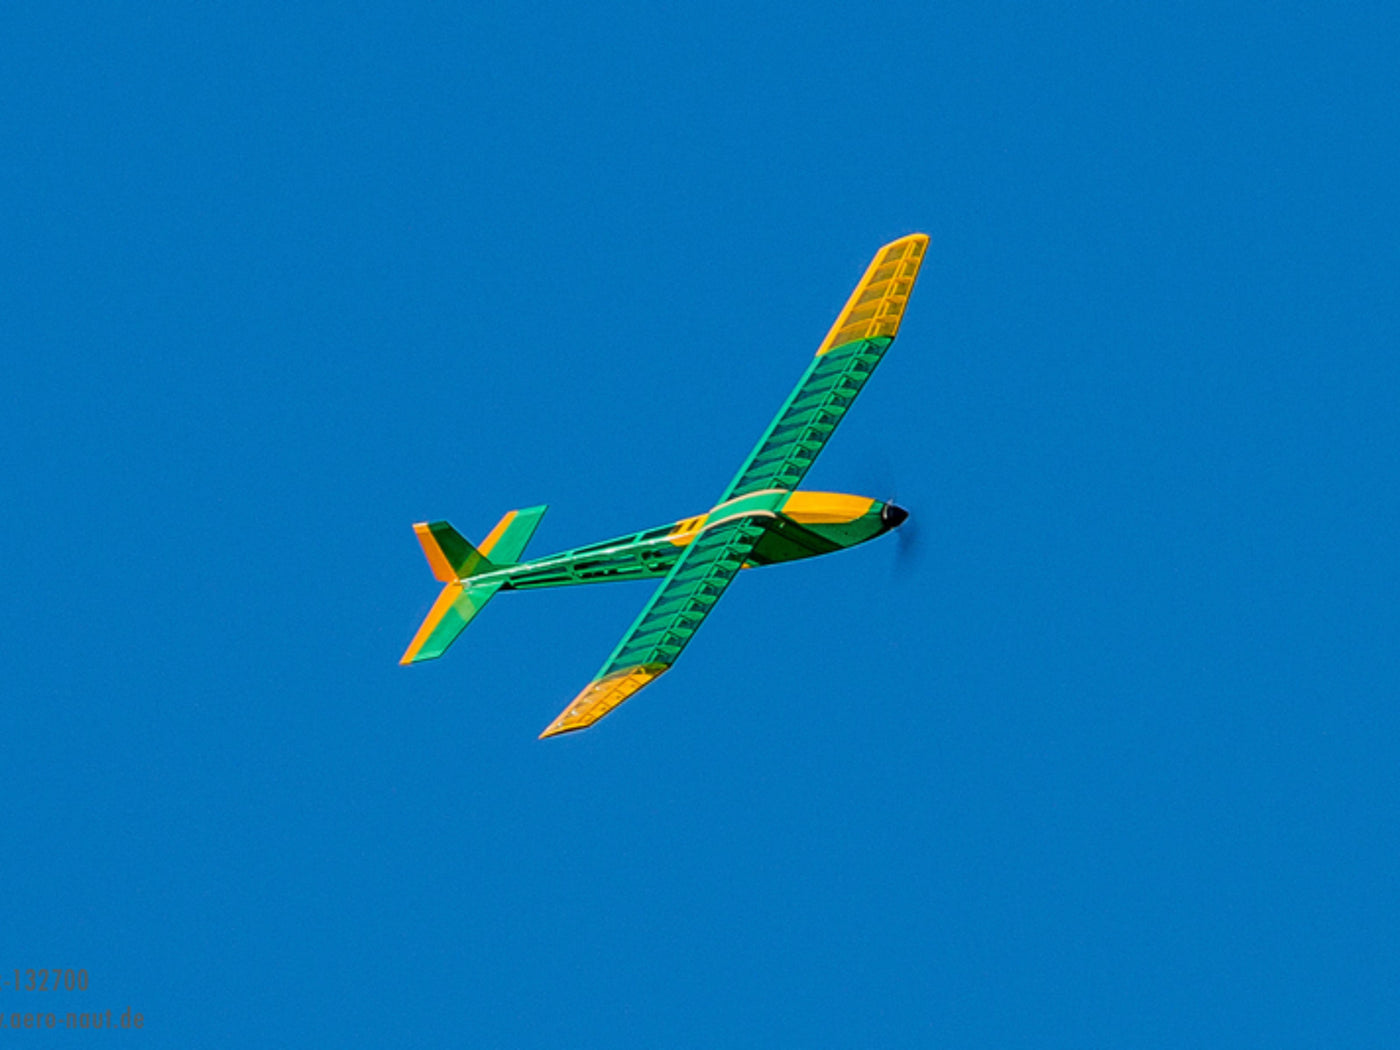 The Luxx 1.3m Electric Glider by Aero-naut